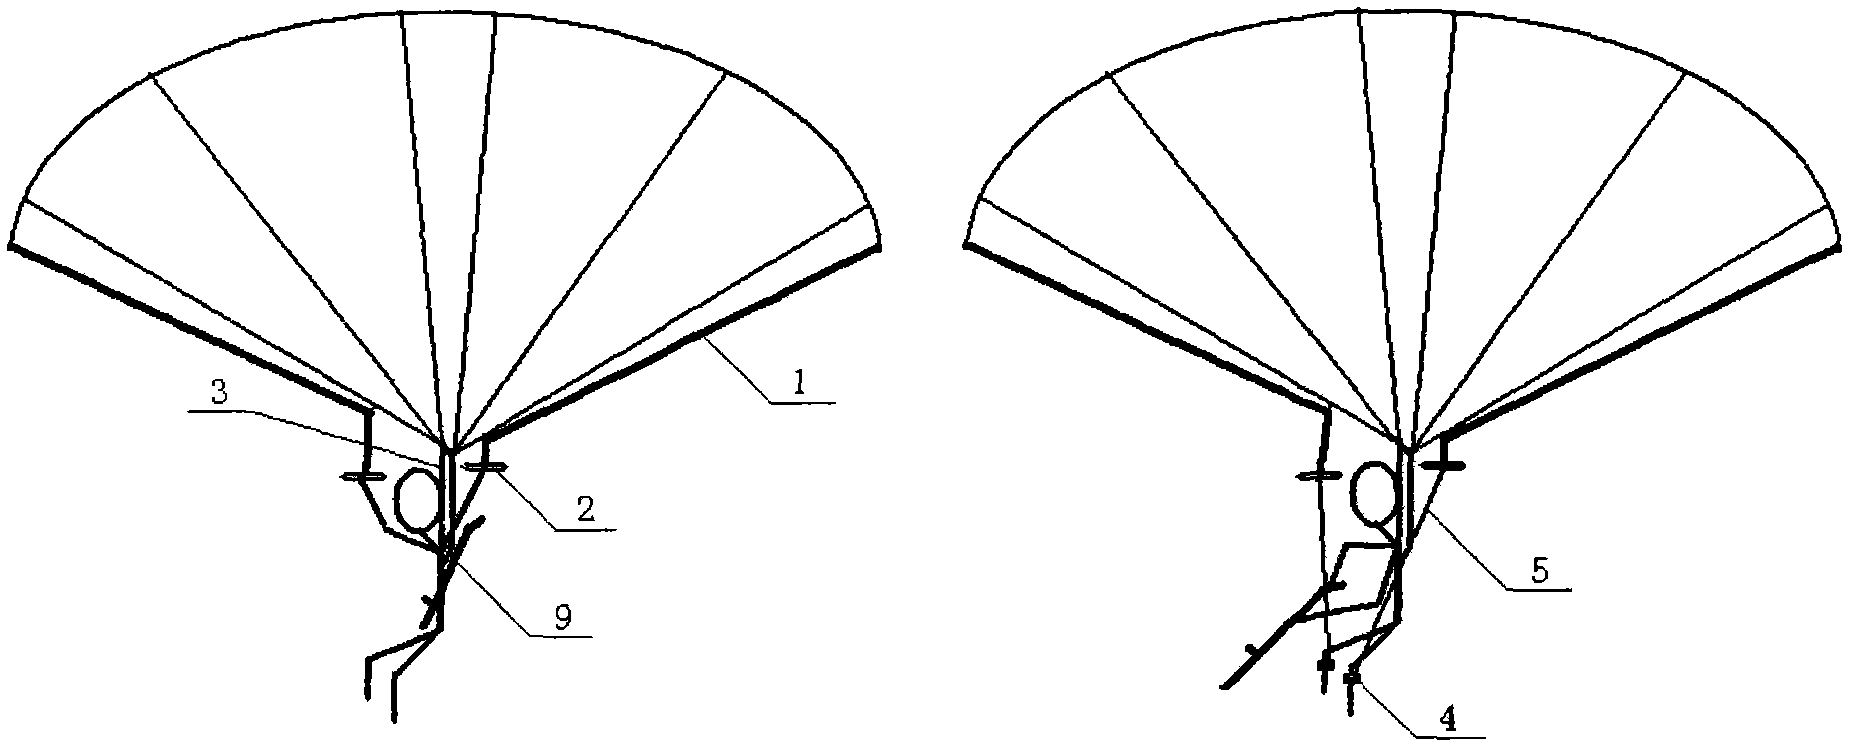 Parachute landing method for airborne troop and novel parachute